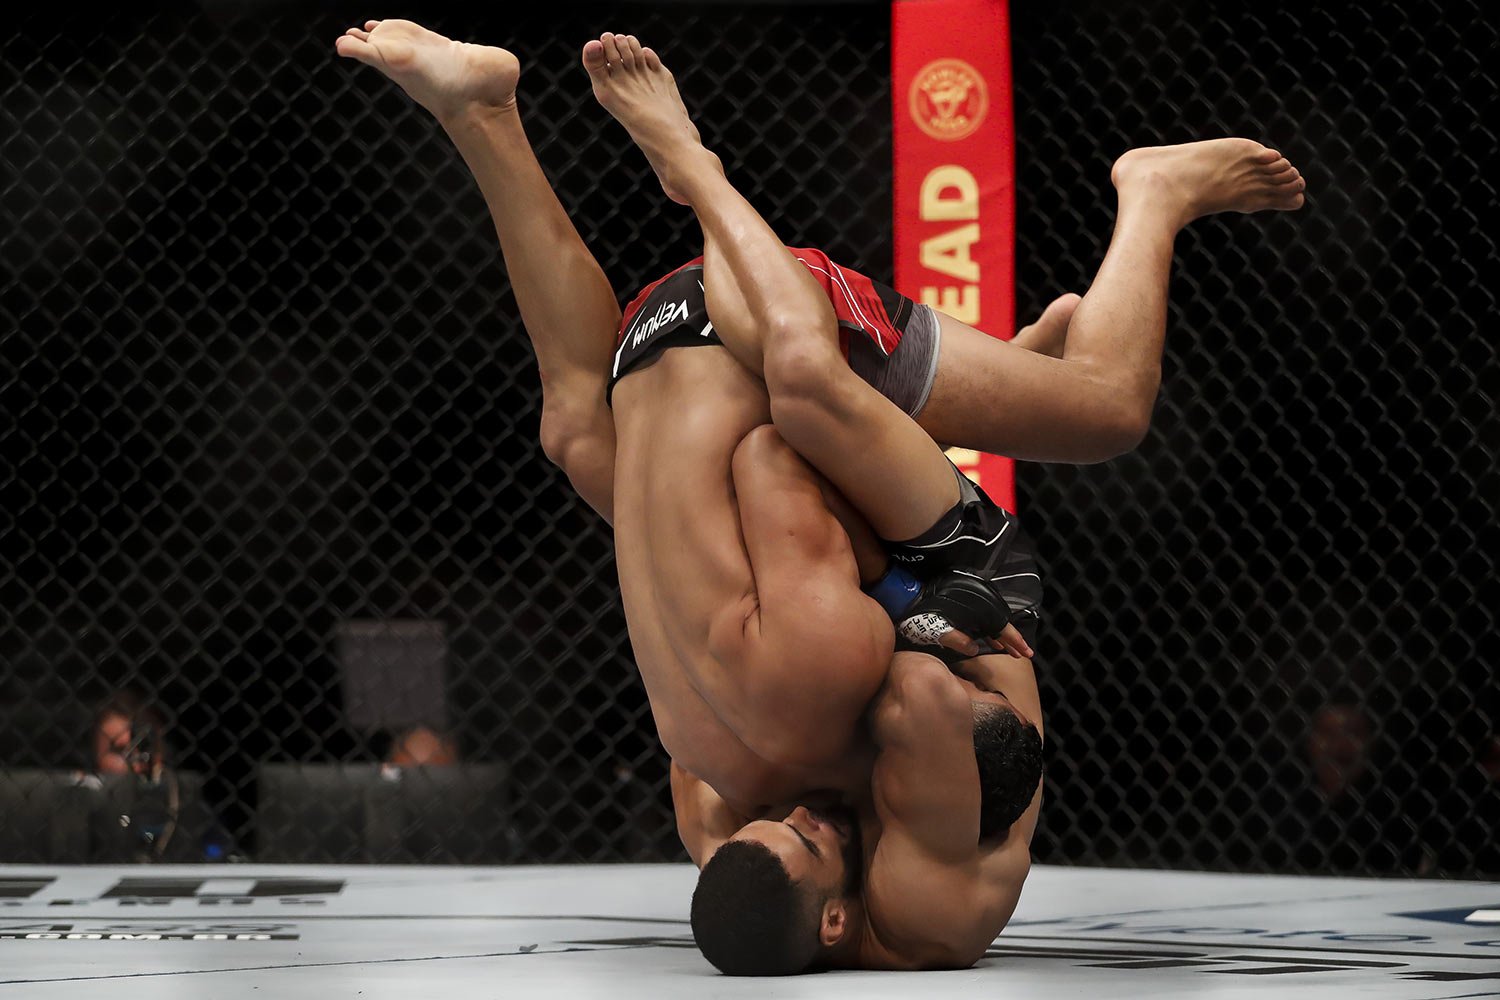  Brazil's Gabriel Bonfim, right, takes down Tunisia's Mounir Lazzez during their welterweight bout at the UFC 283 mixed martial arts event in Rio de Janeiro, Brazil, Jan. 21, 2023. (AP Photo/Bruna Prado) 